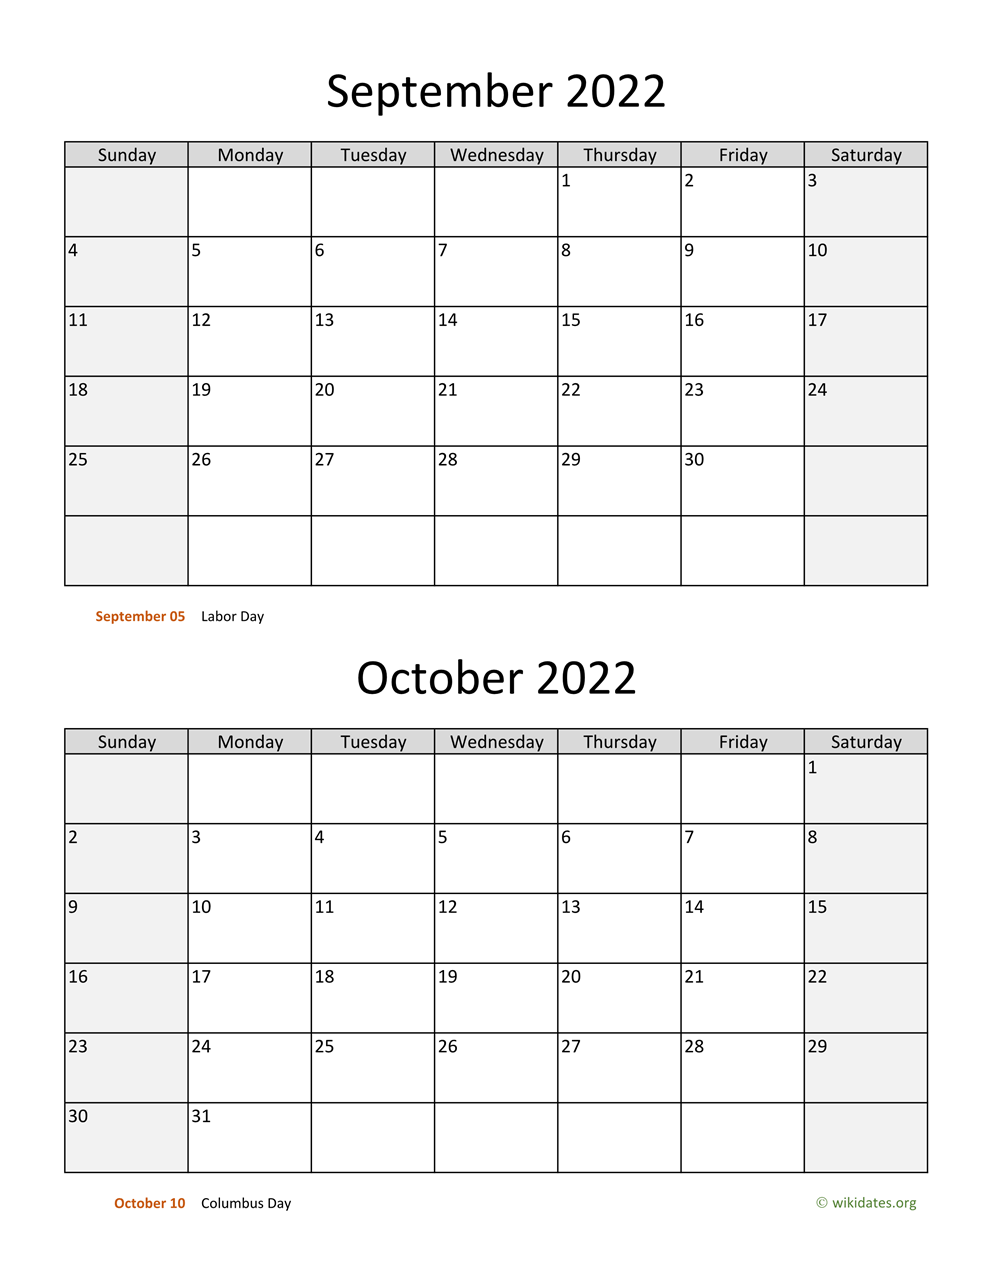 September October 2022 Calendar Printable September And October 2022 Calendar | Wikidates.org